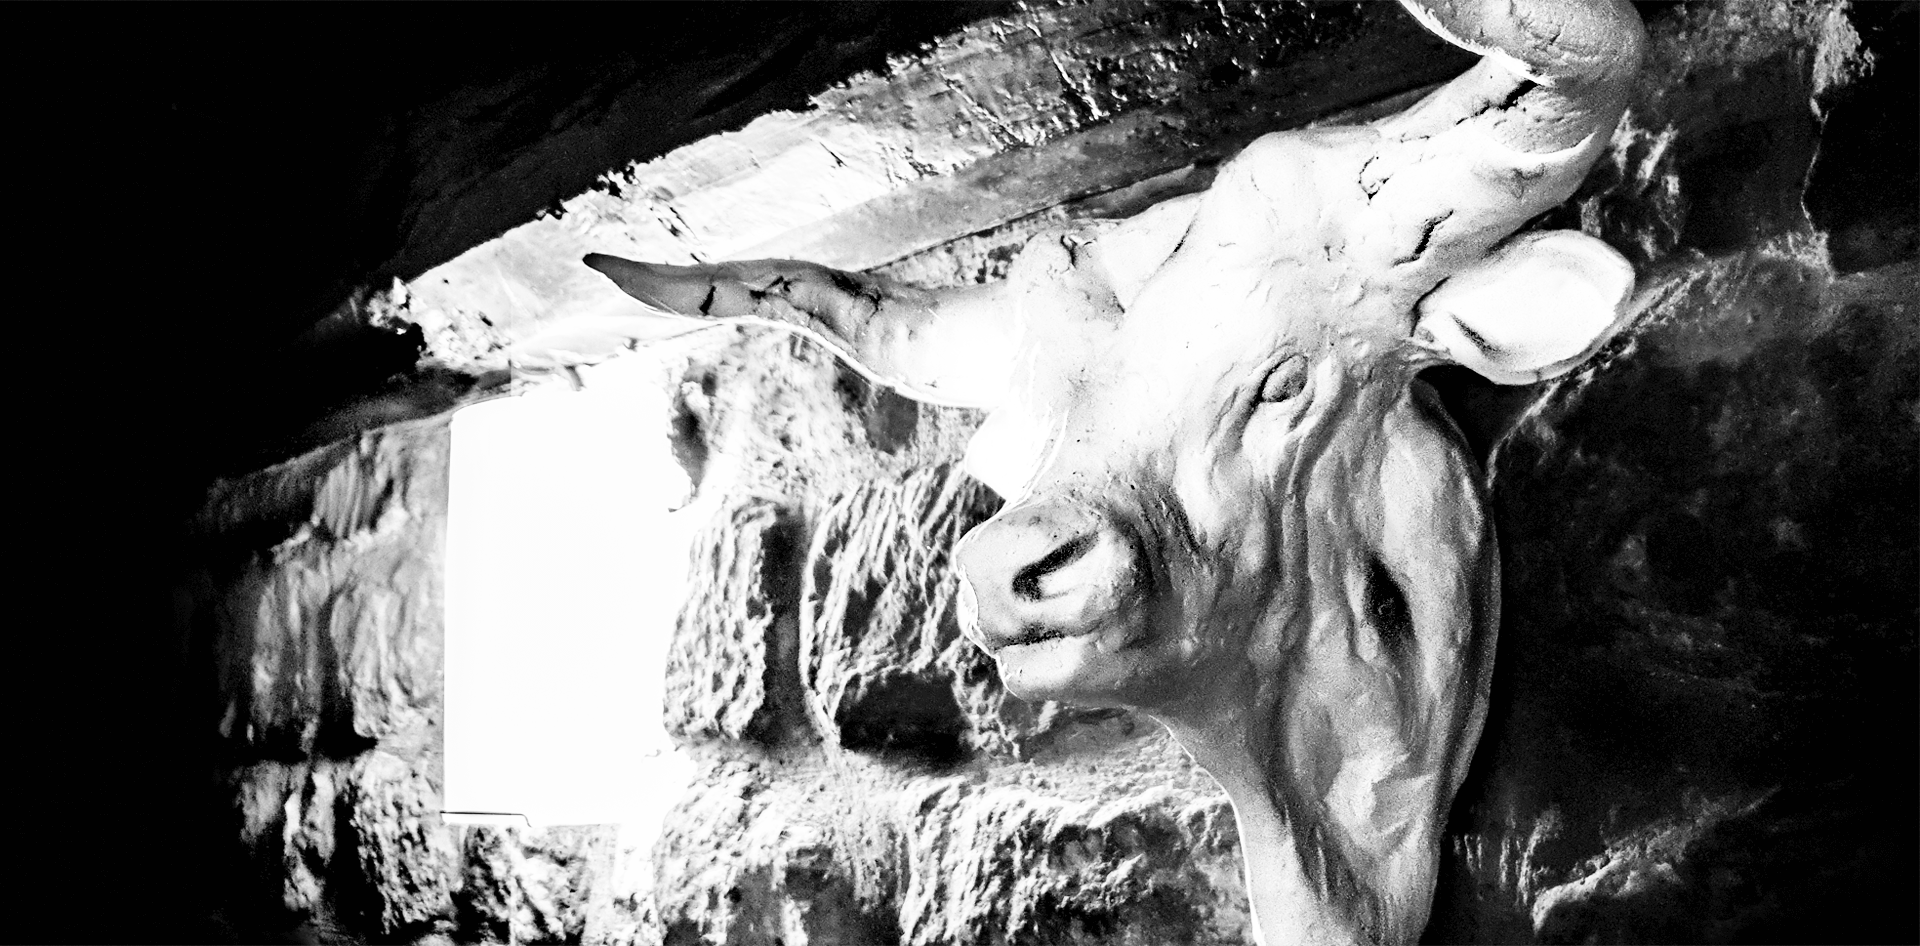 Bulls head sculpture on the wall